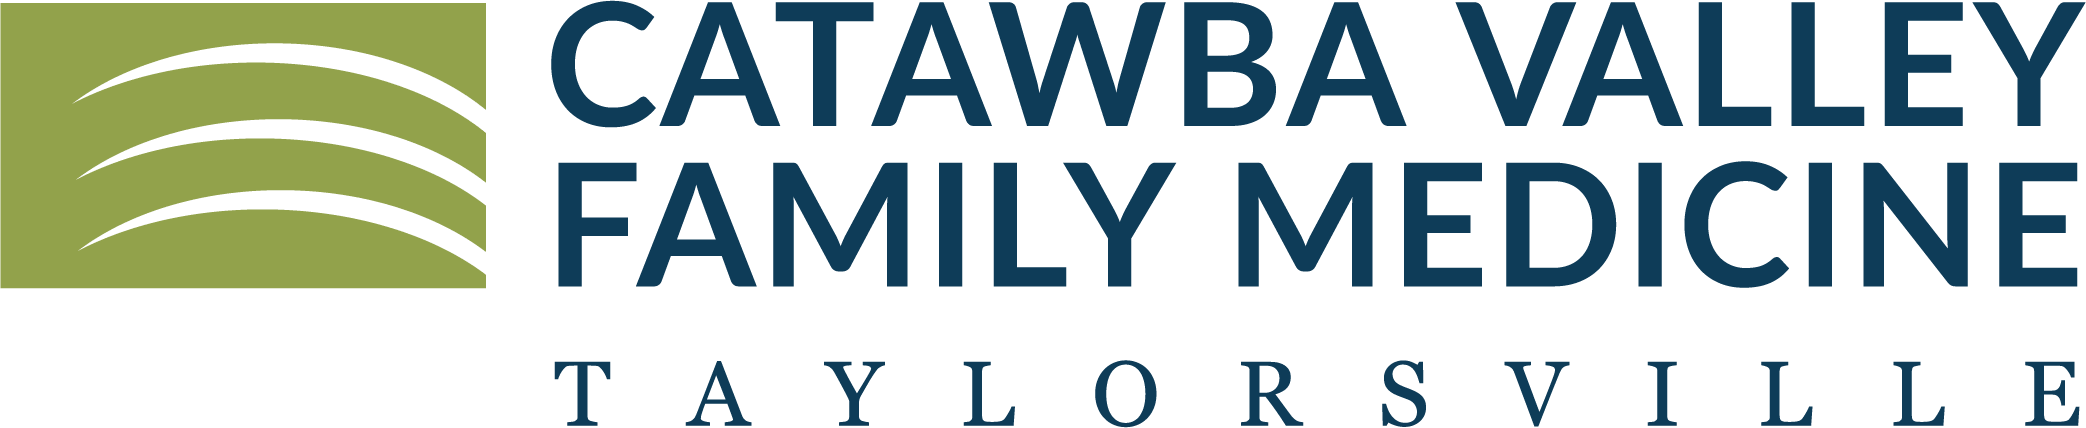 Catawba Valley Family Medicine - Taylorsville